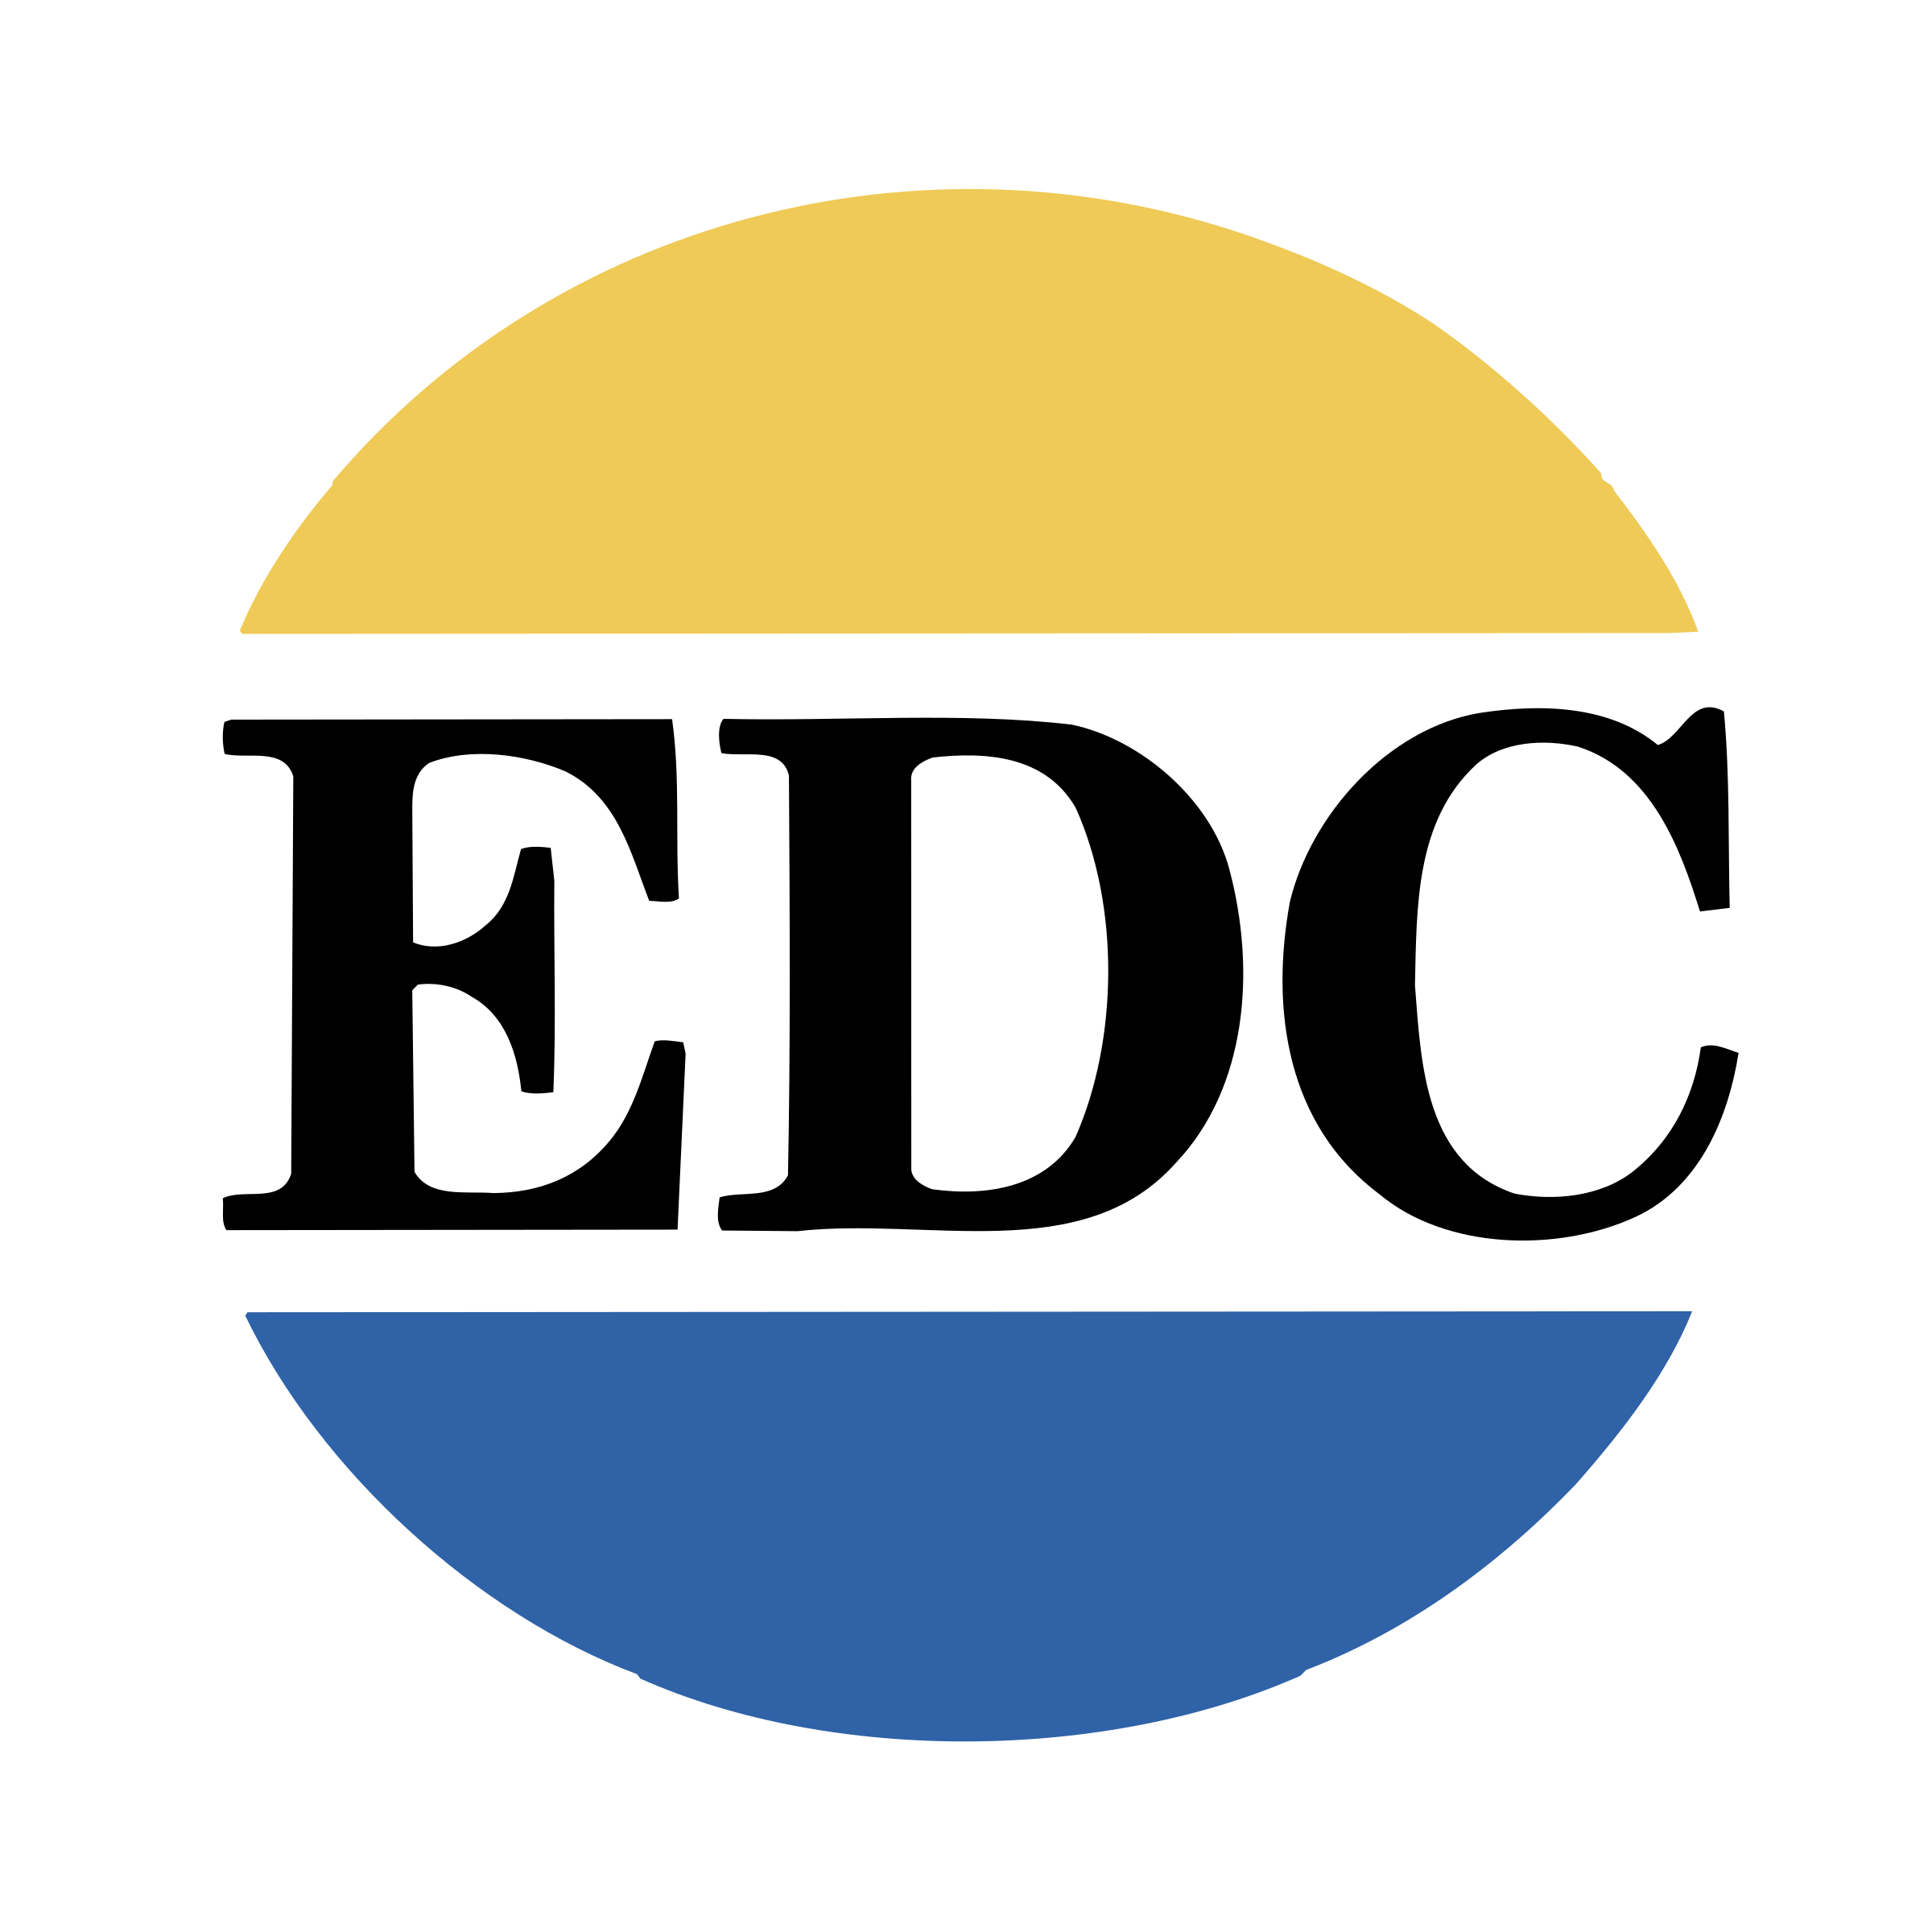 EDC Logo - EDC Logo PNG Transparent & SVG Vector